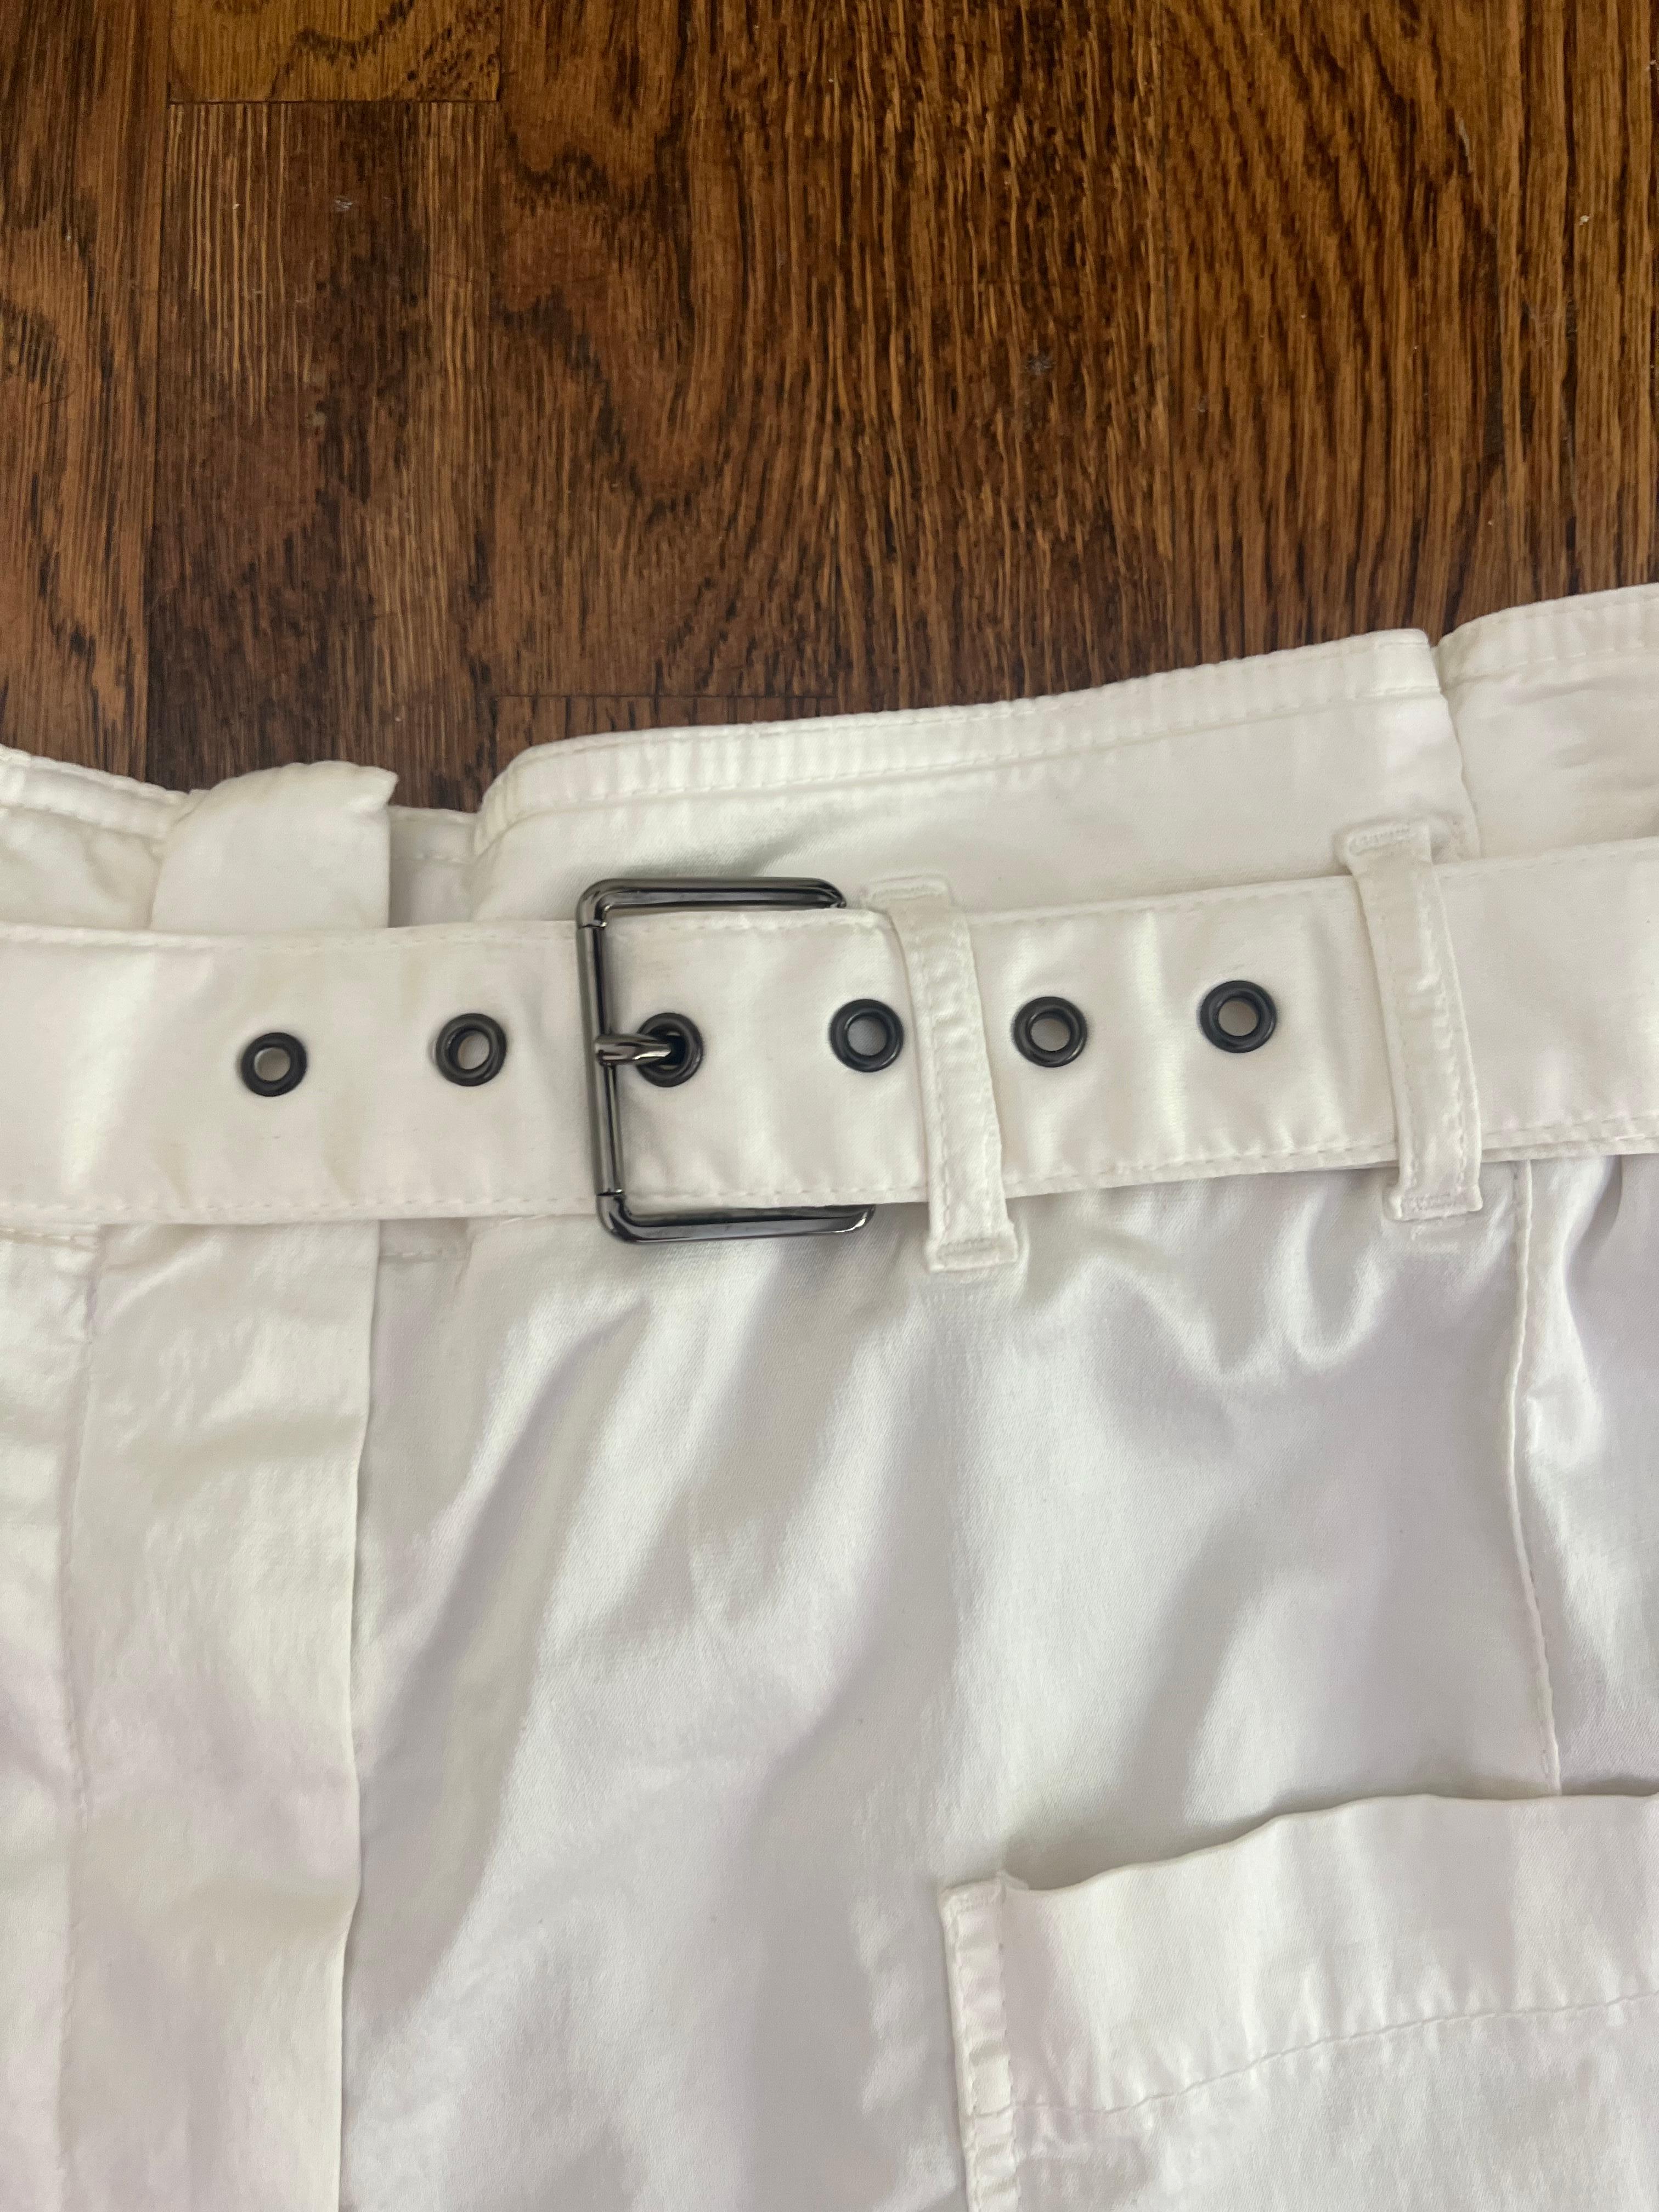 - Belted detail
- Front pockets 
- Rear pockets